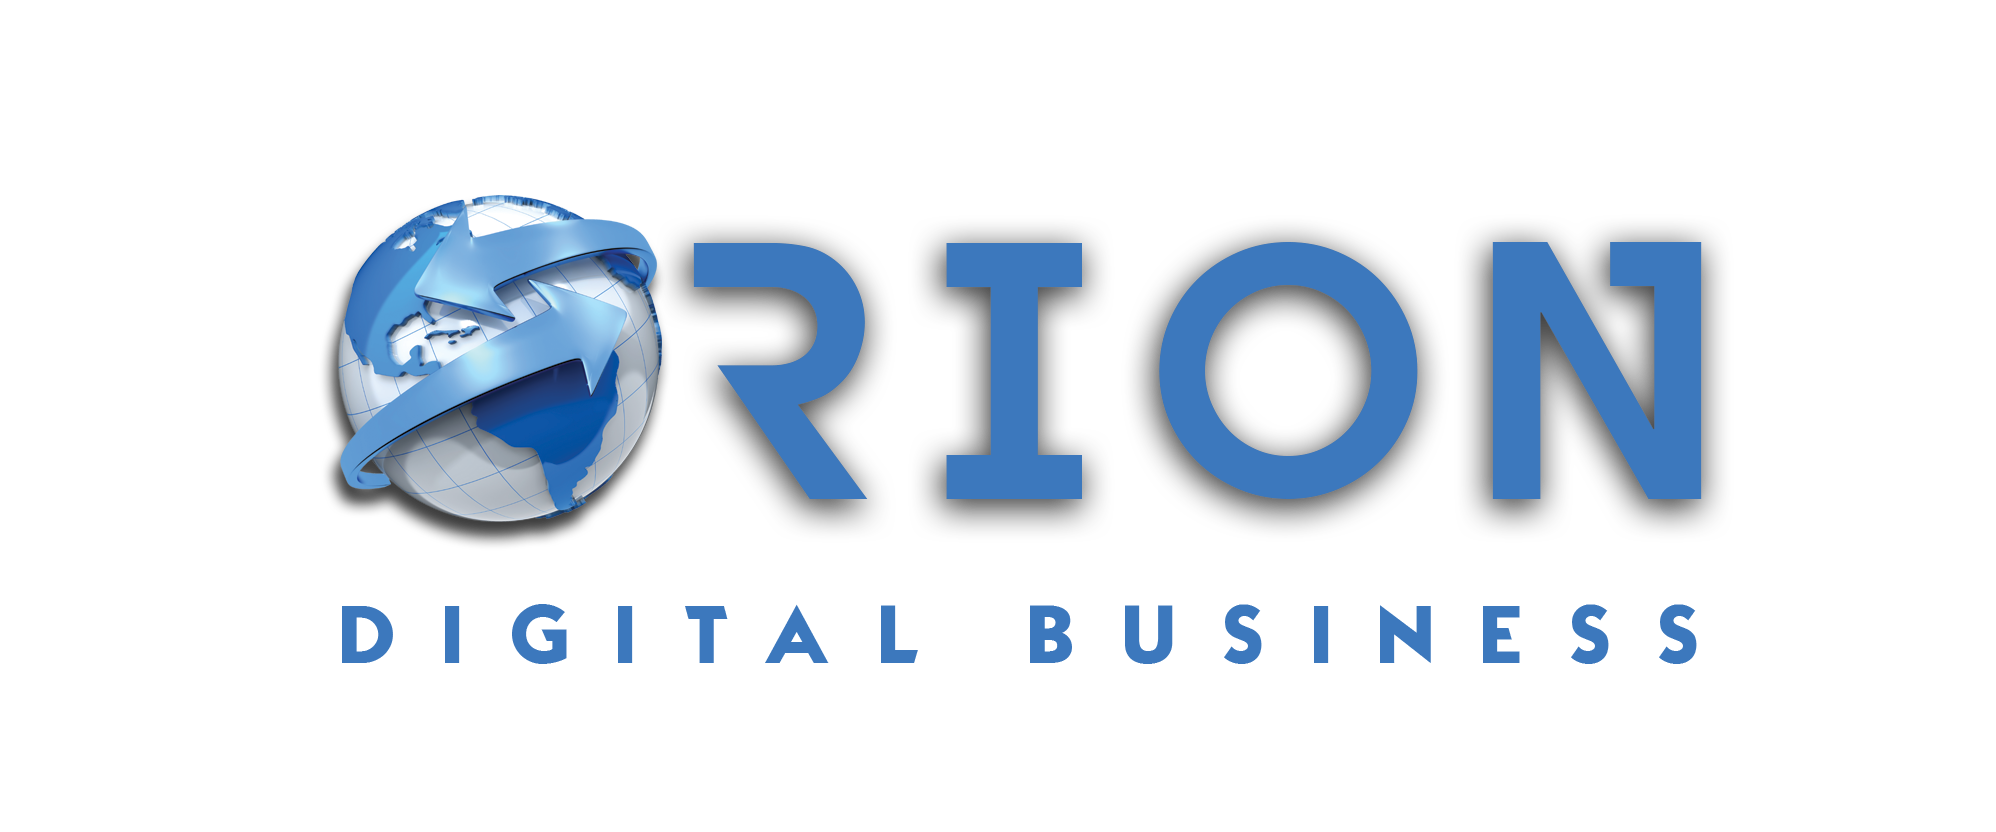 An orion digital company